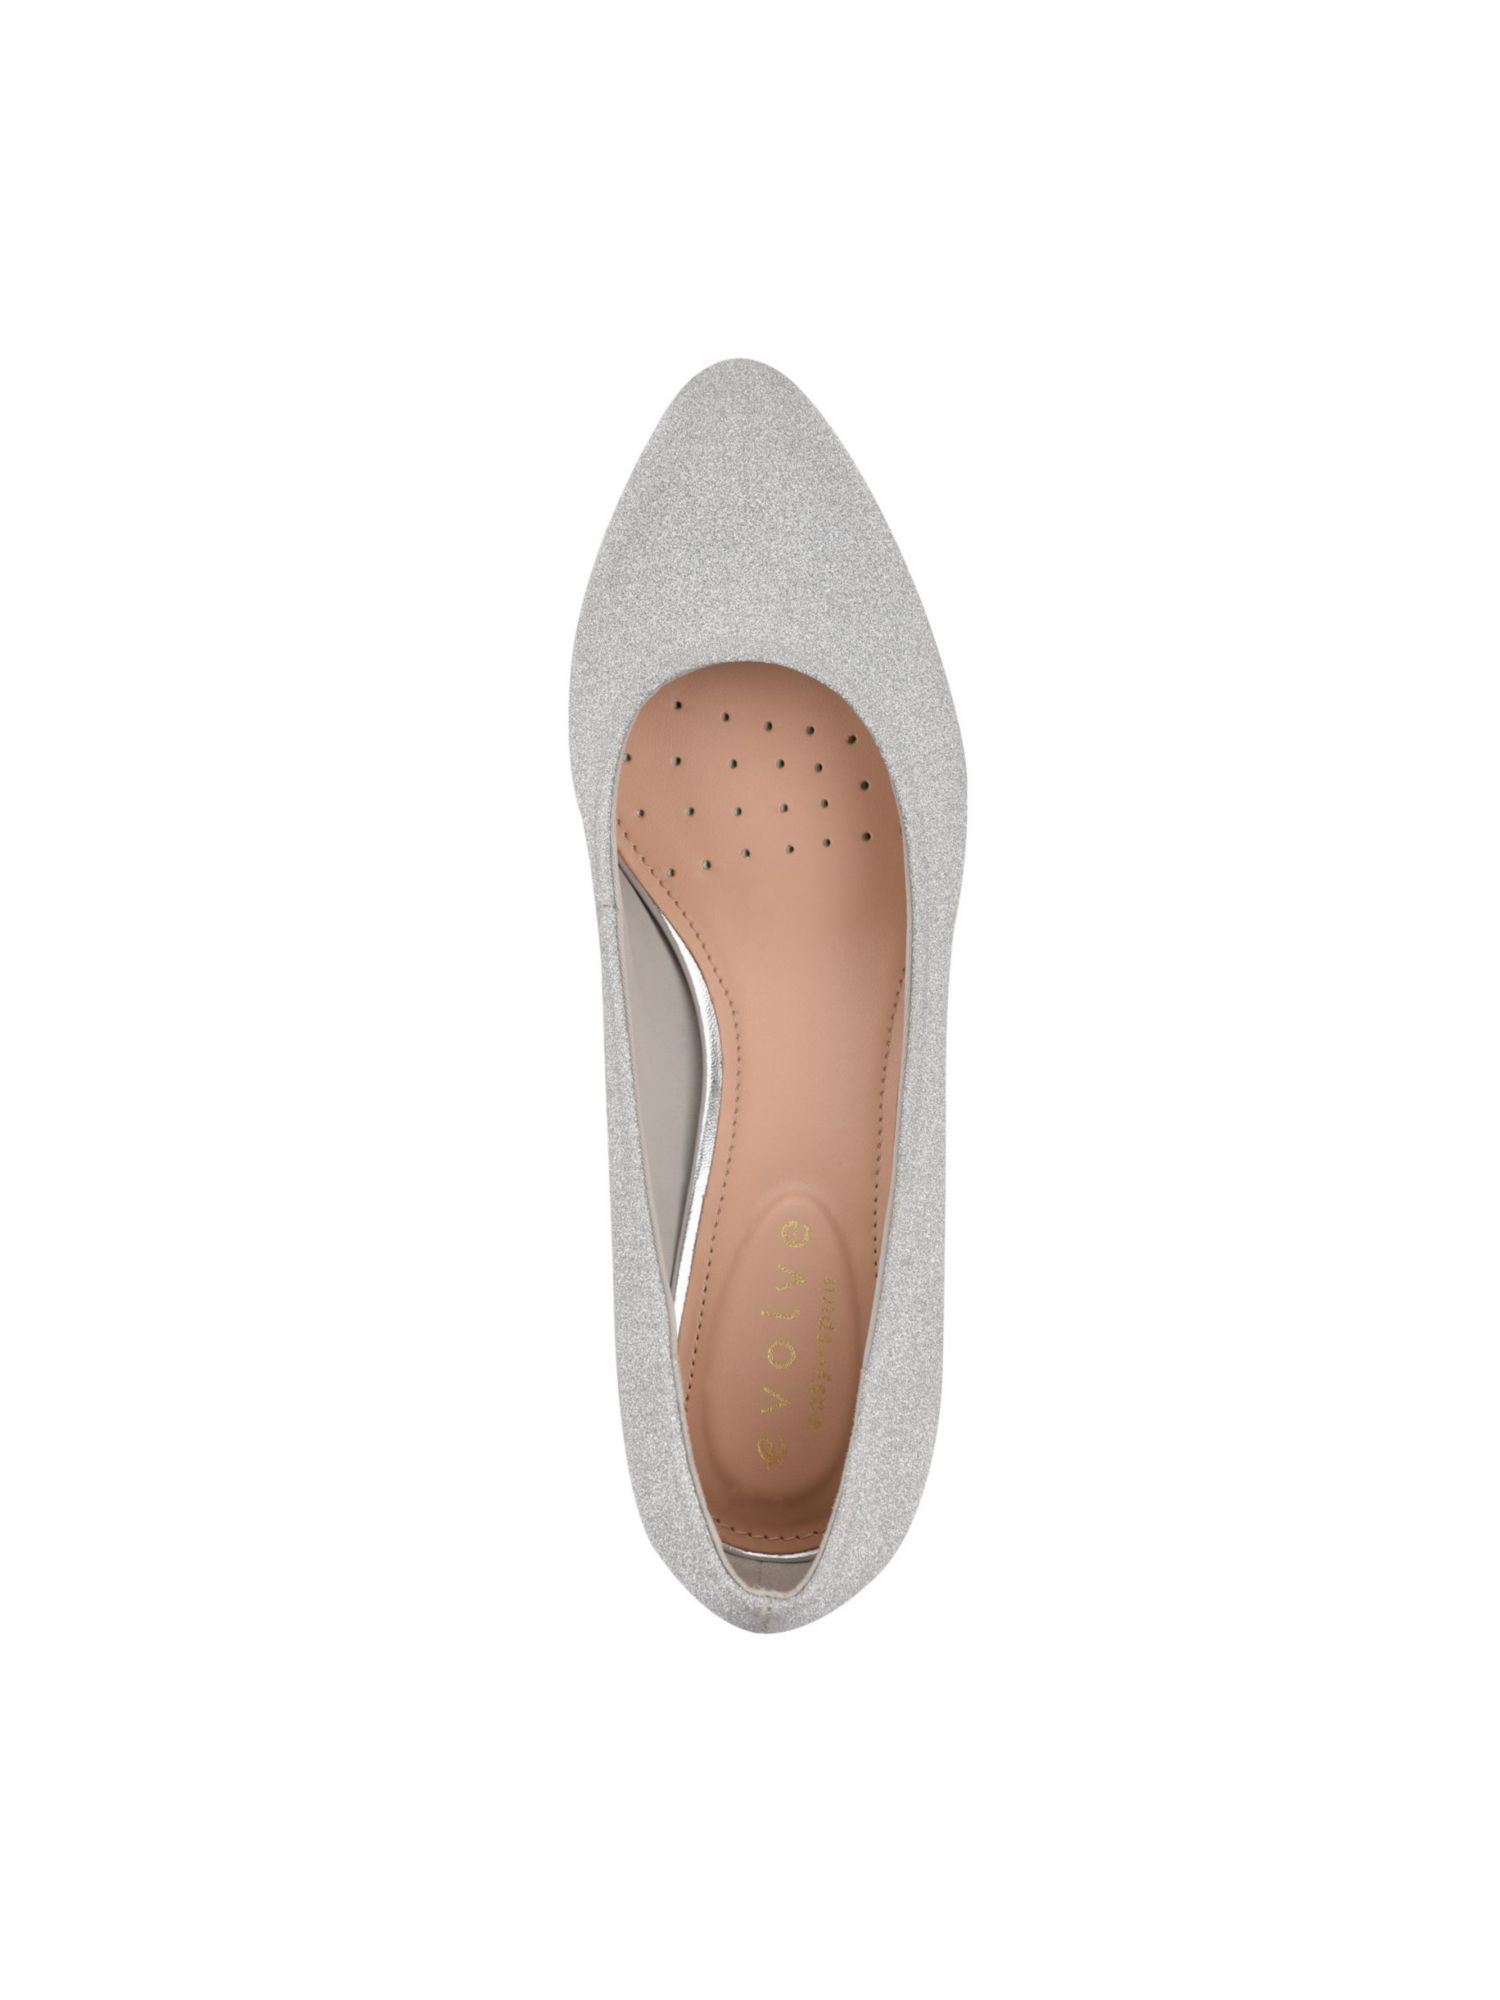 EVOLVE Womens Silver Glitter Padded Robin3 Almond Toe Block Heel Slip On Pumps Shoes 9 M